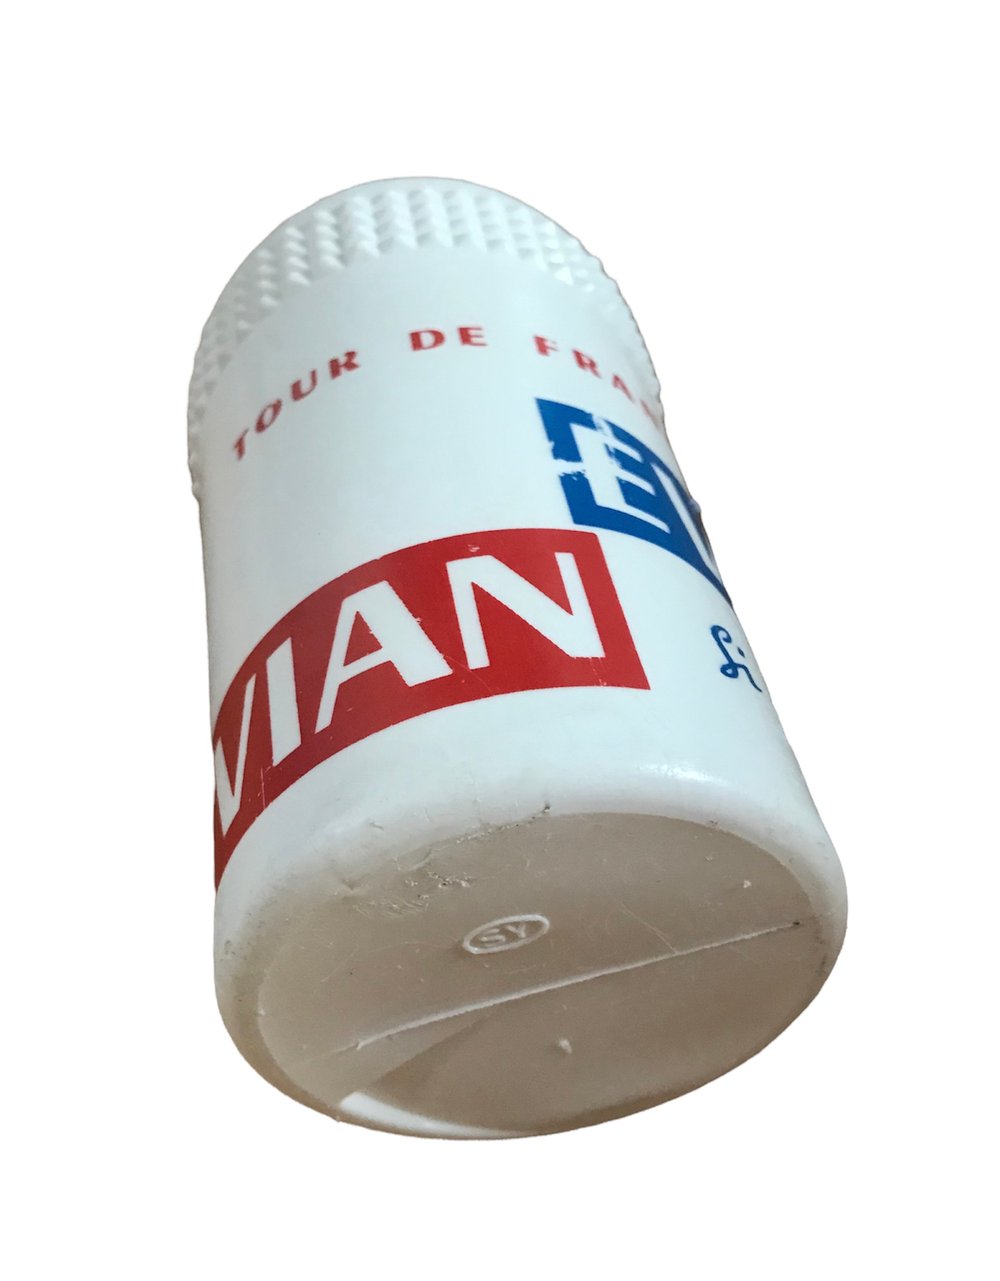 Vintage 1960 ðŸ‡«ðŸ‡· Tour de France / Evian water bottle